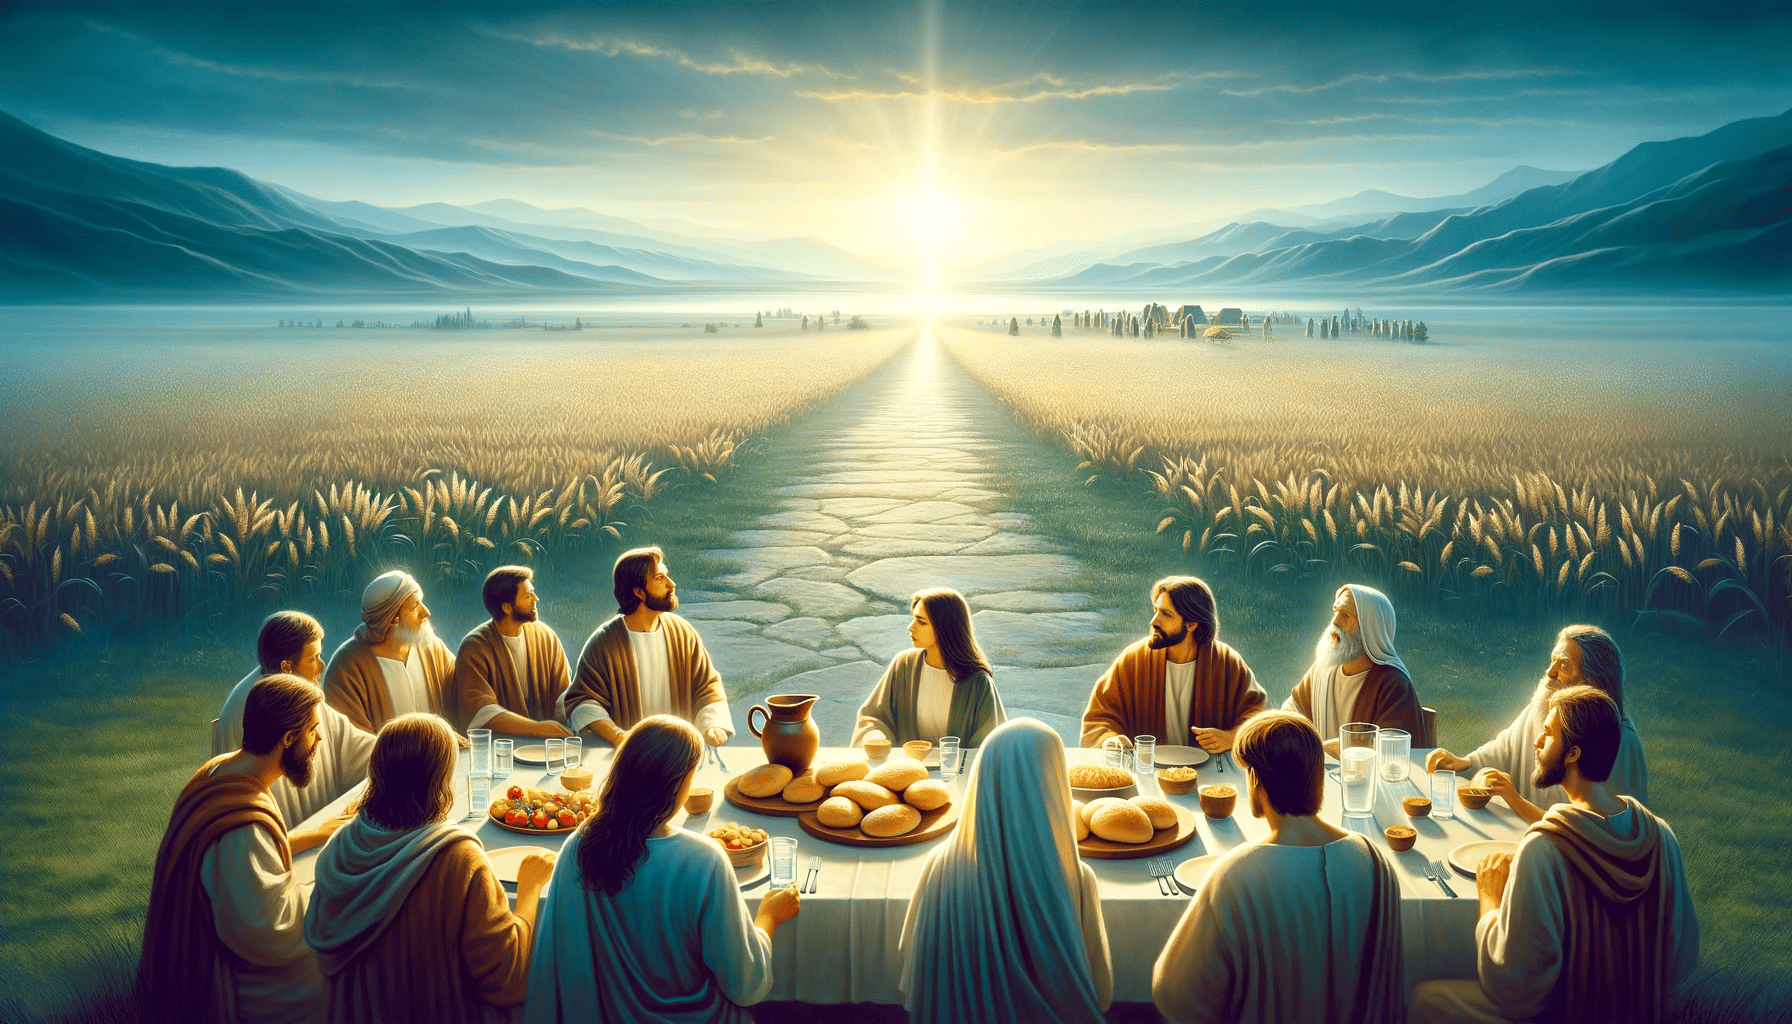 What Happens if You Come to Jesus for Spiritual Nourishment?